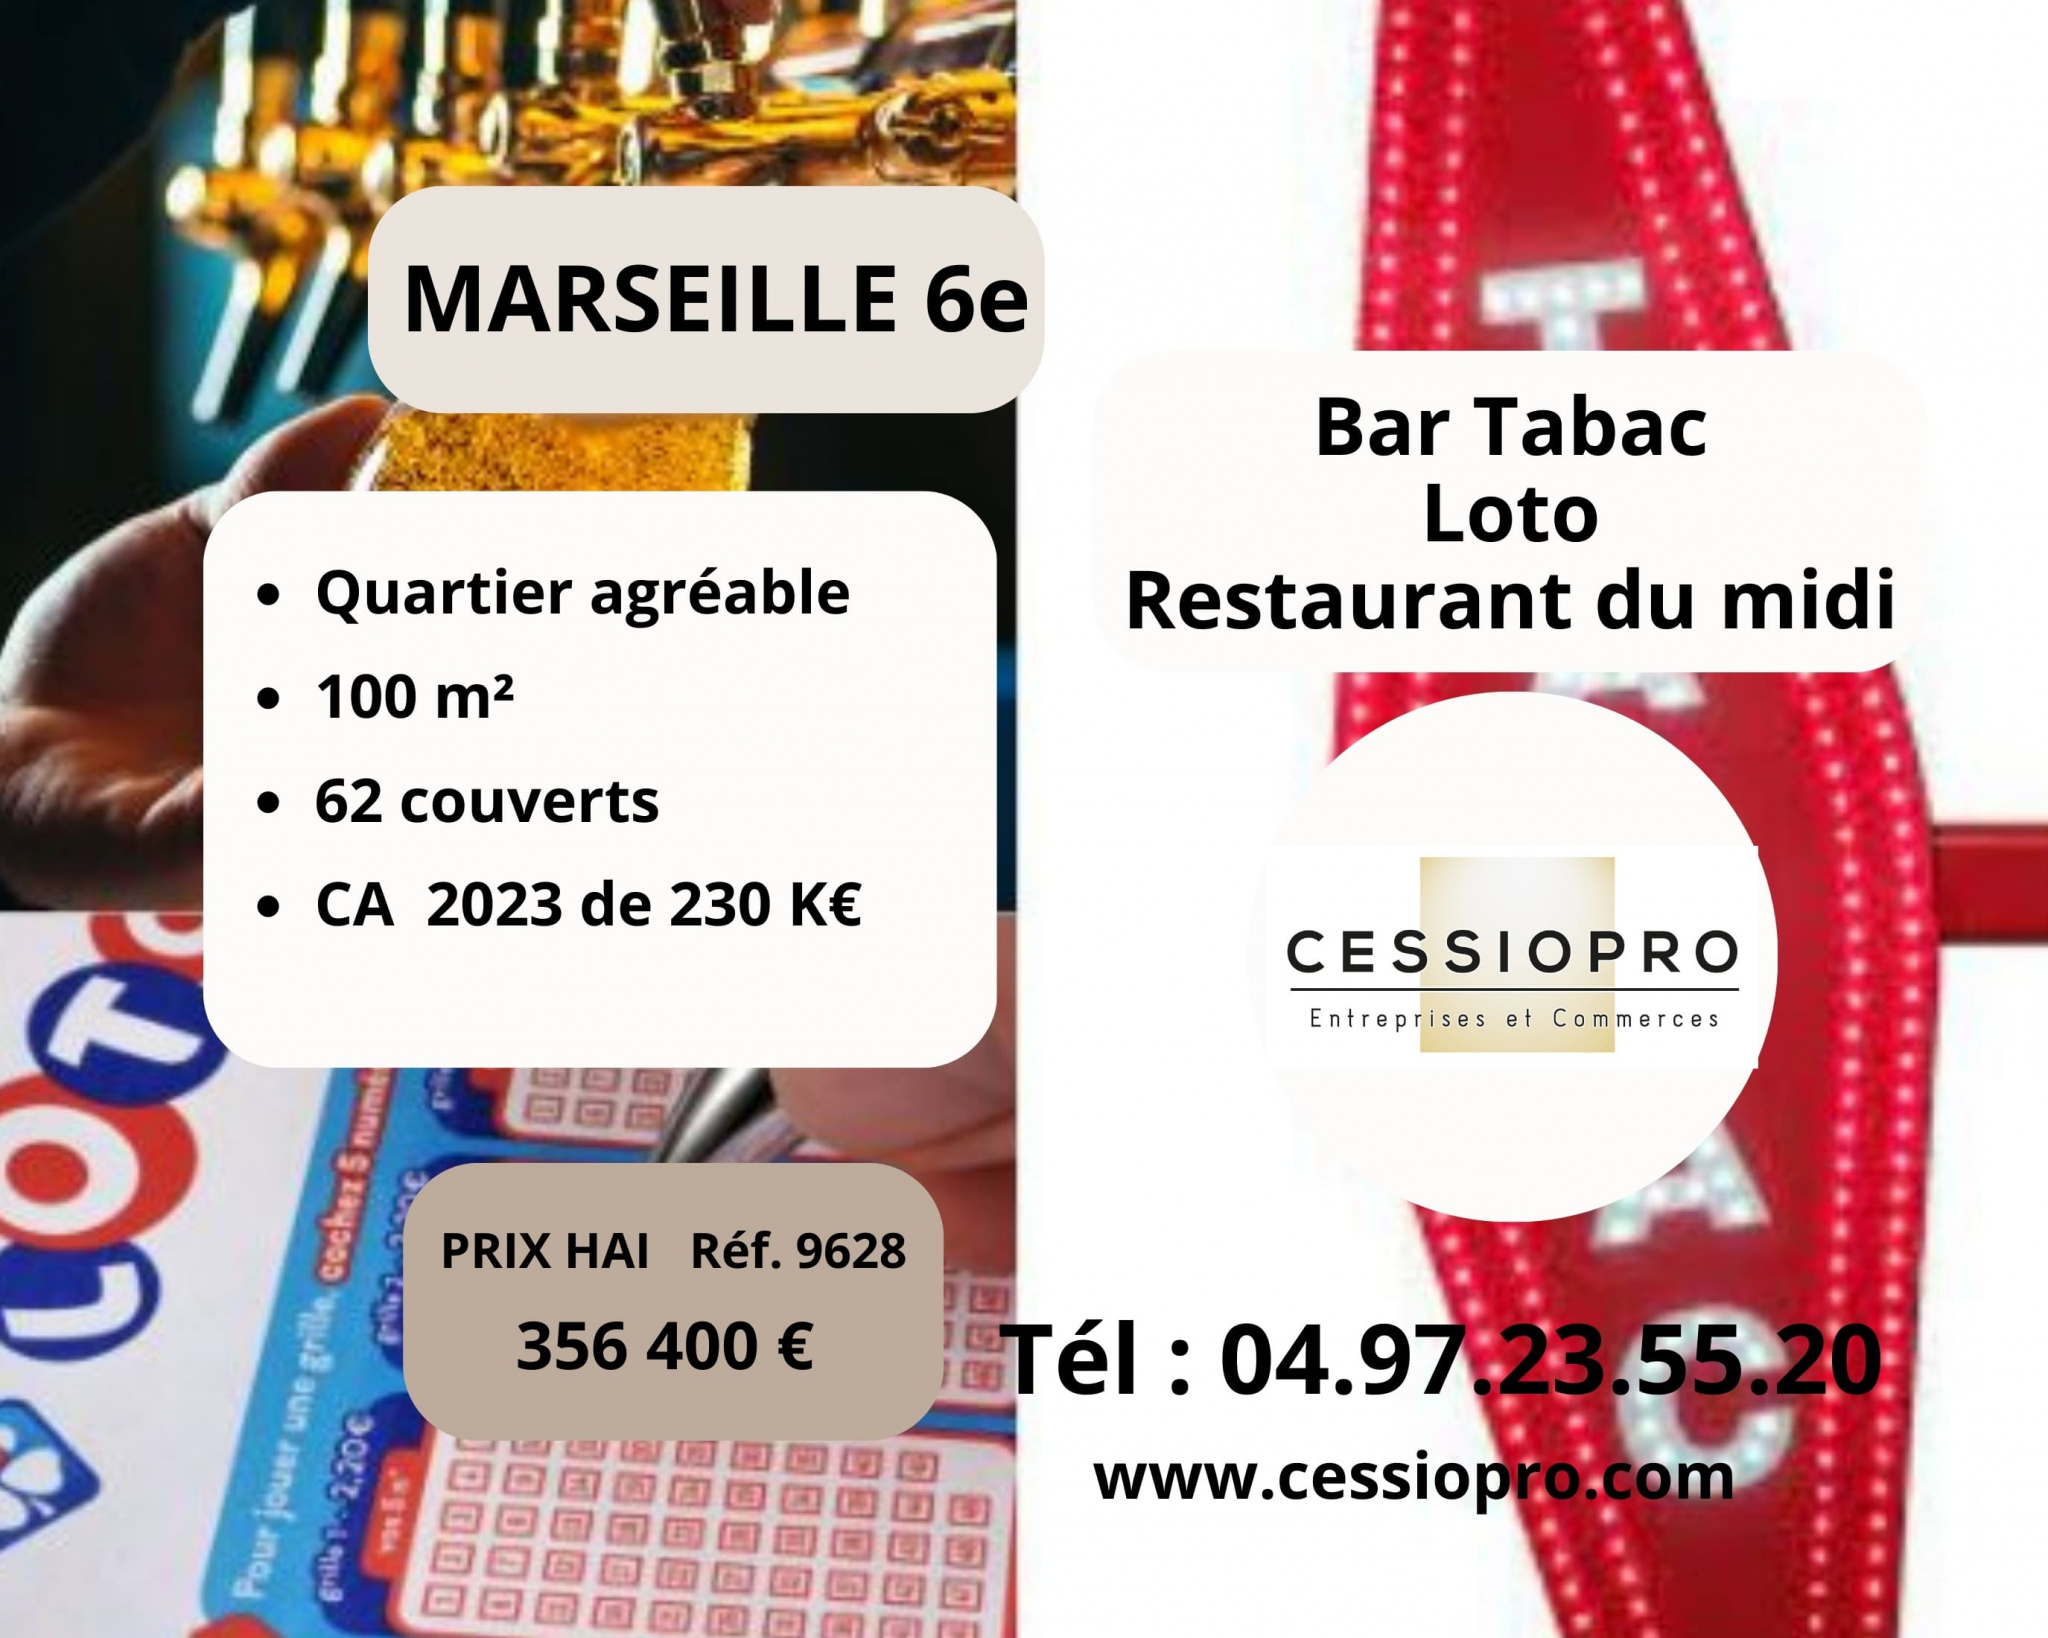 Bar Tabac Loto Restaurant du midi, Marseille 6e